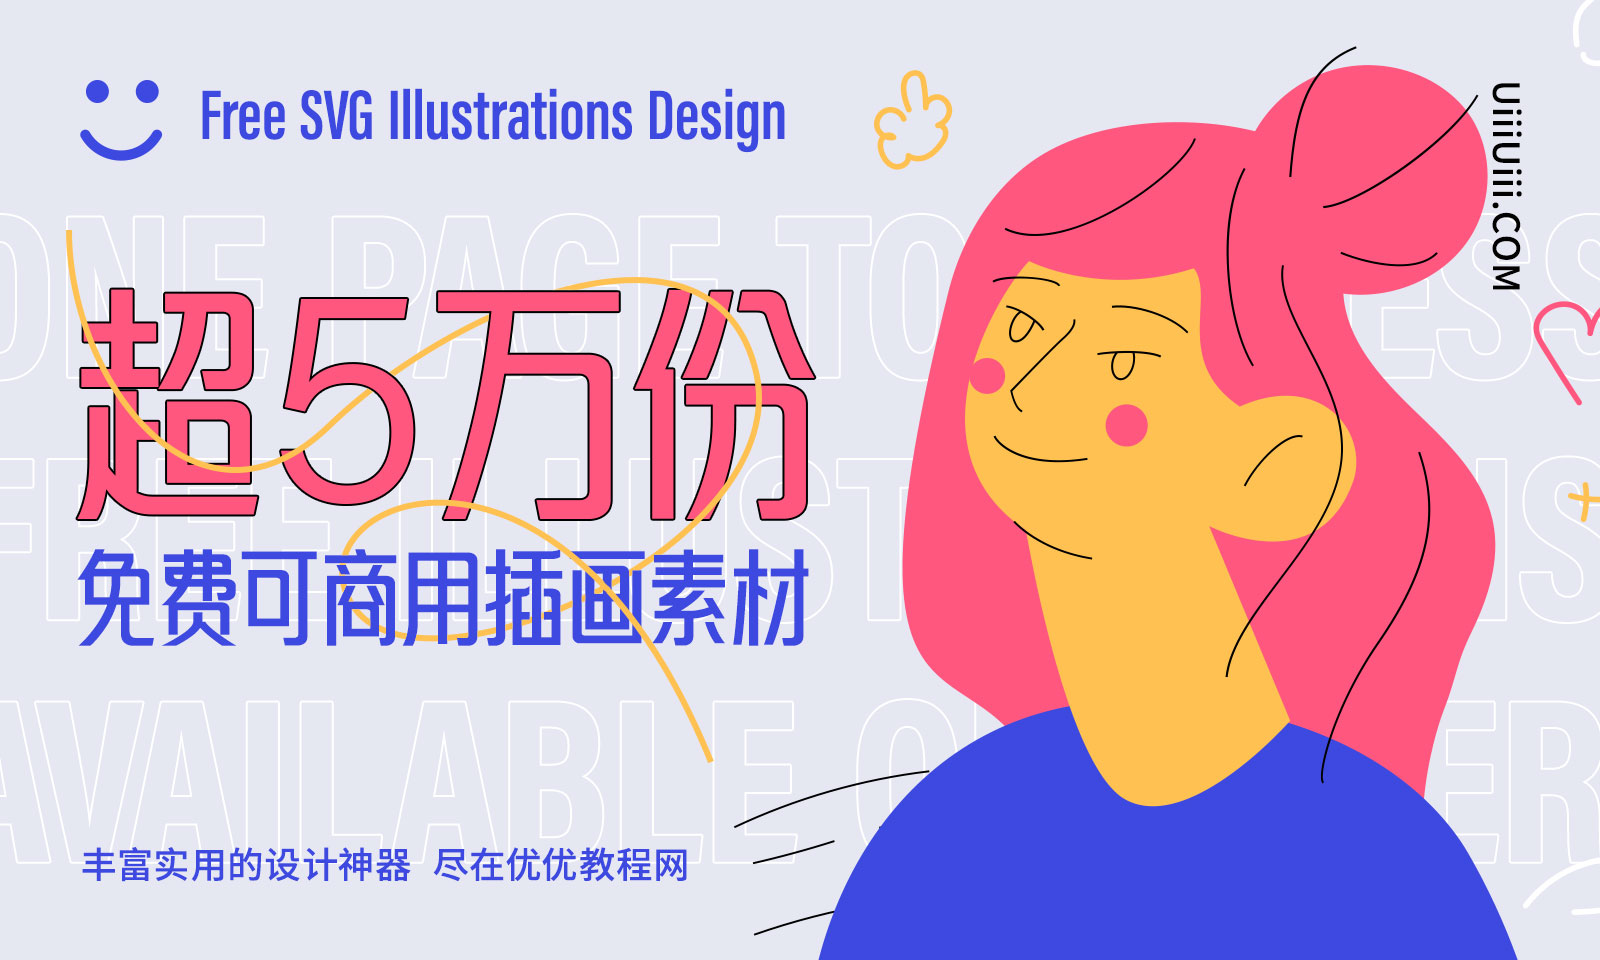 设计神器Free SVG Illustrations Design！超5万份免费商用插画素材